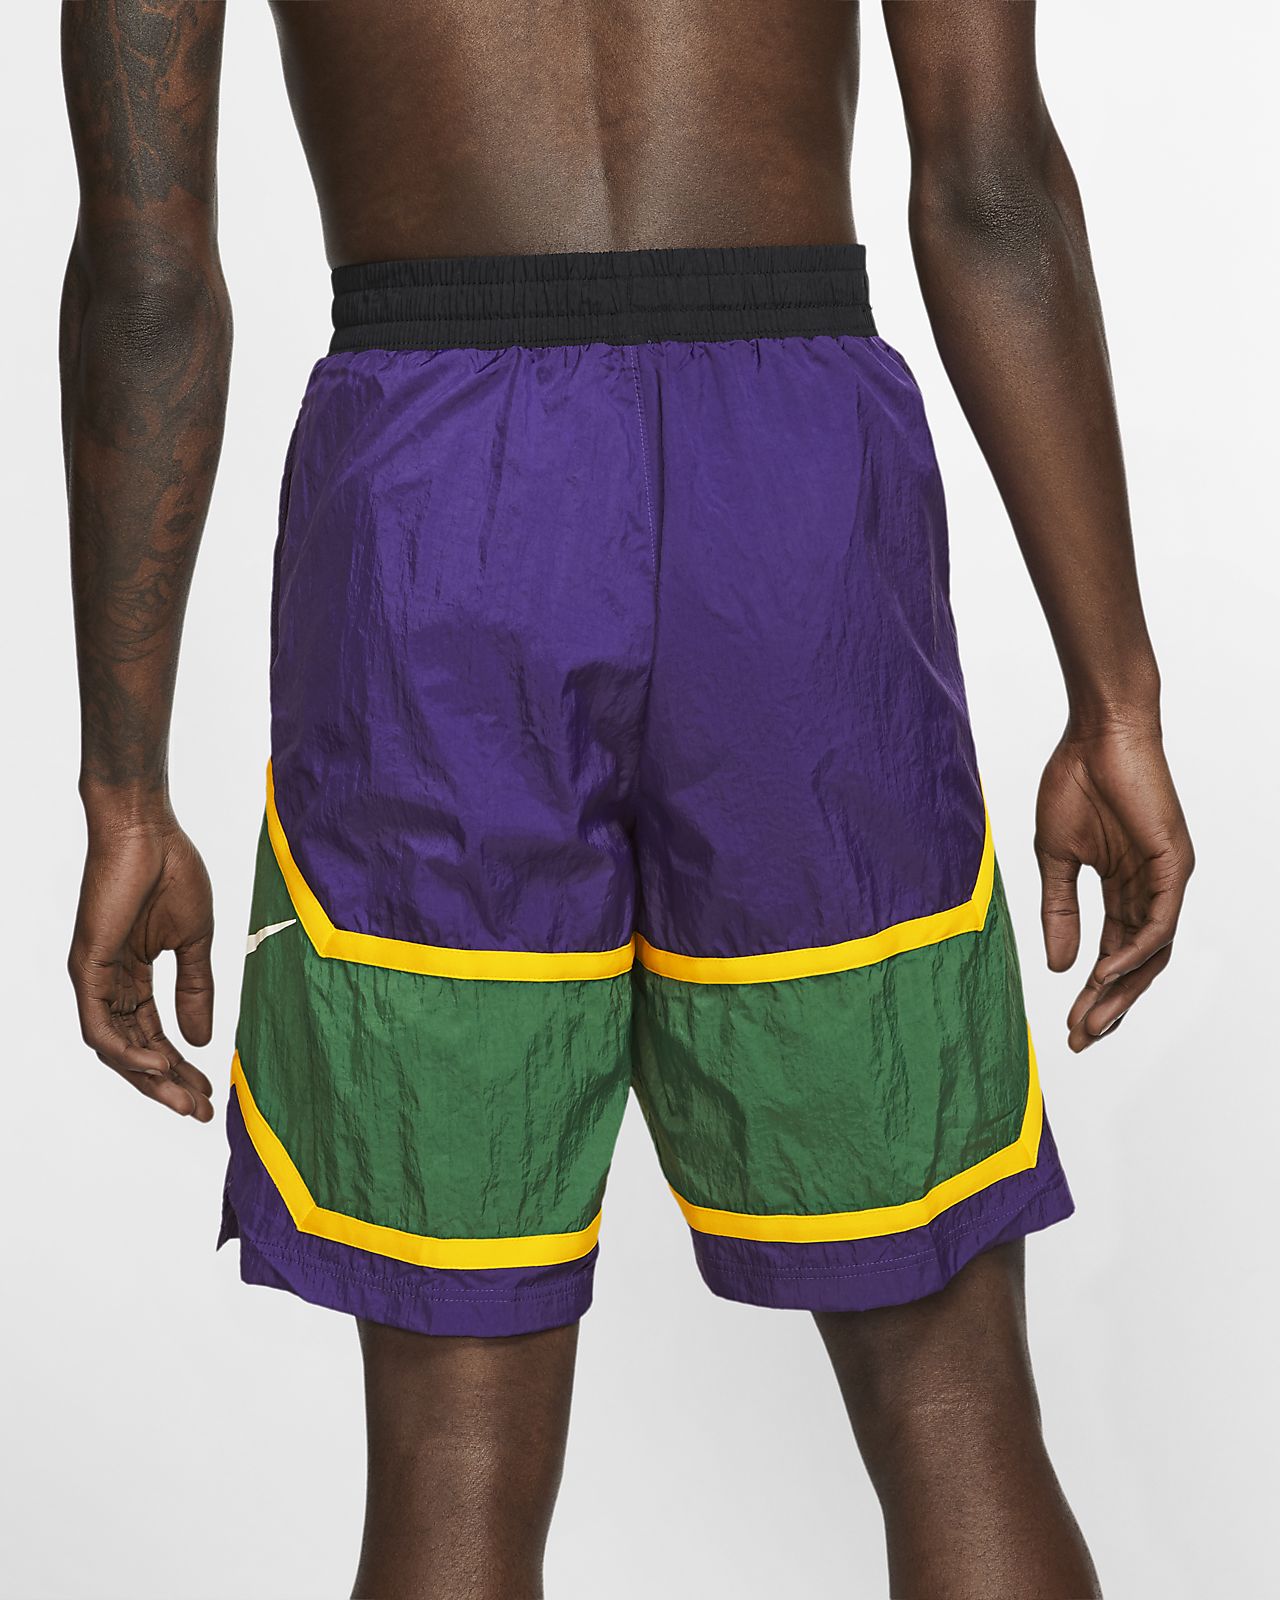 nike basketball shorts 3xl